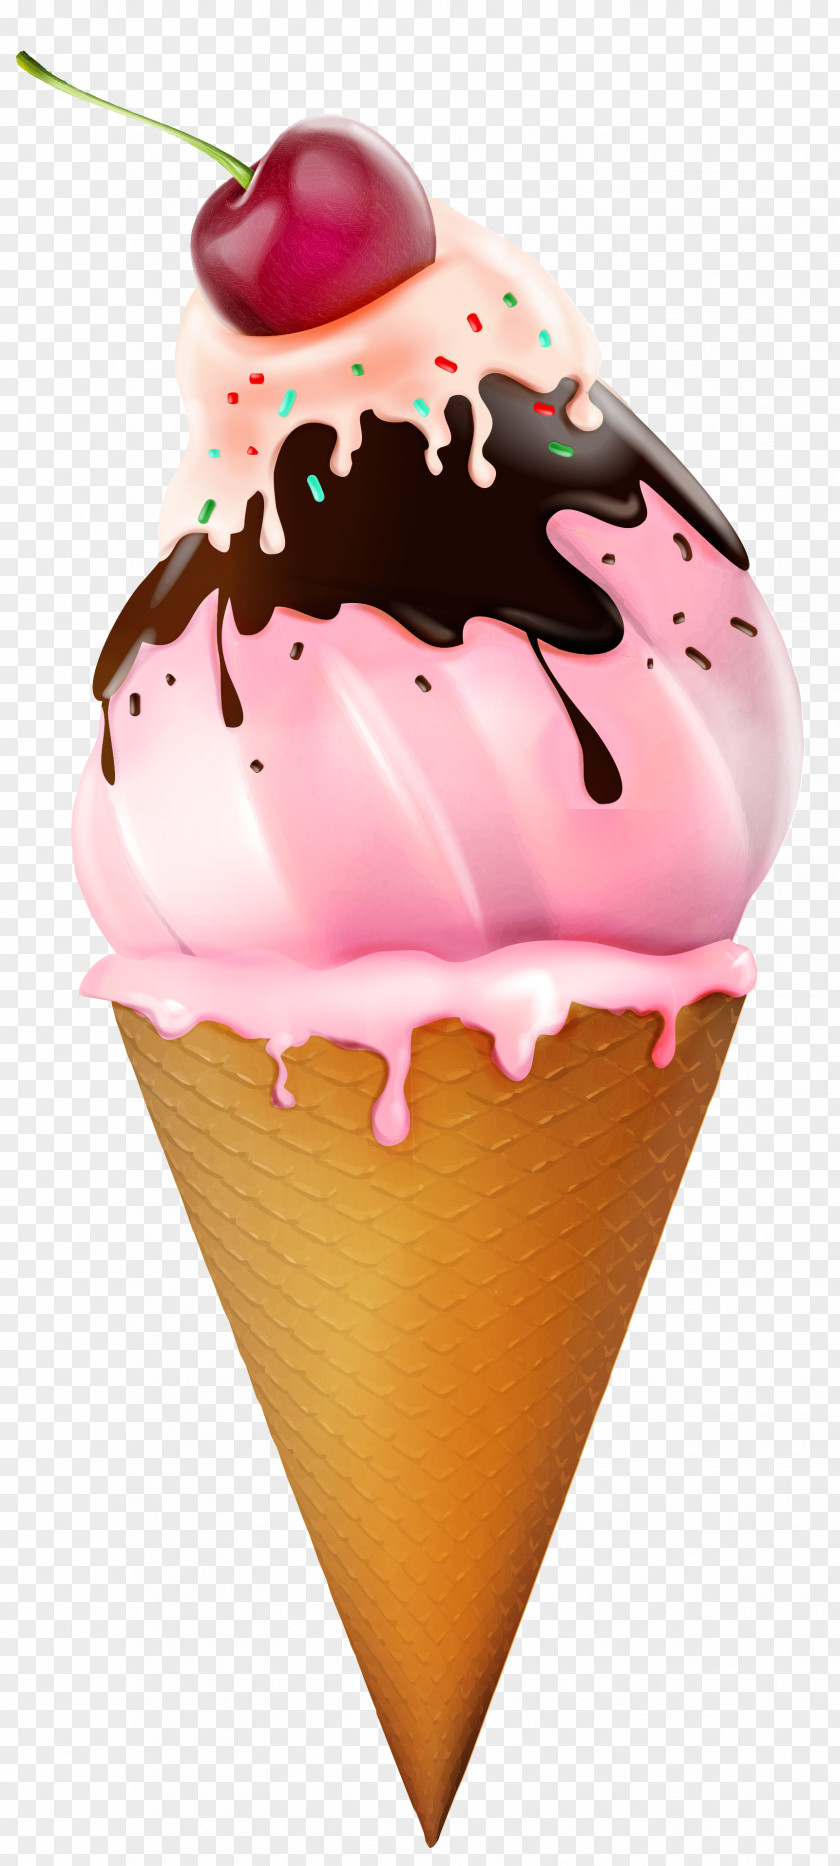 Ice Cream Image PNG